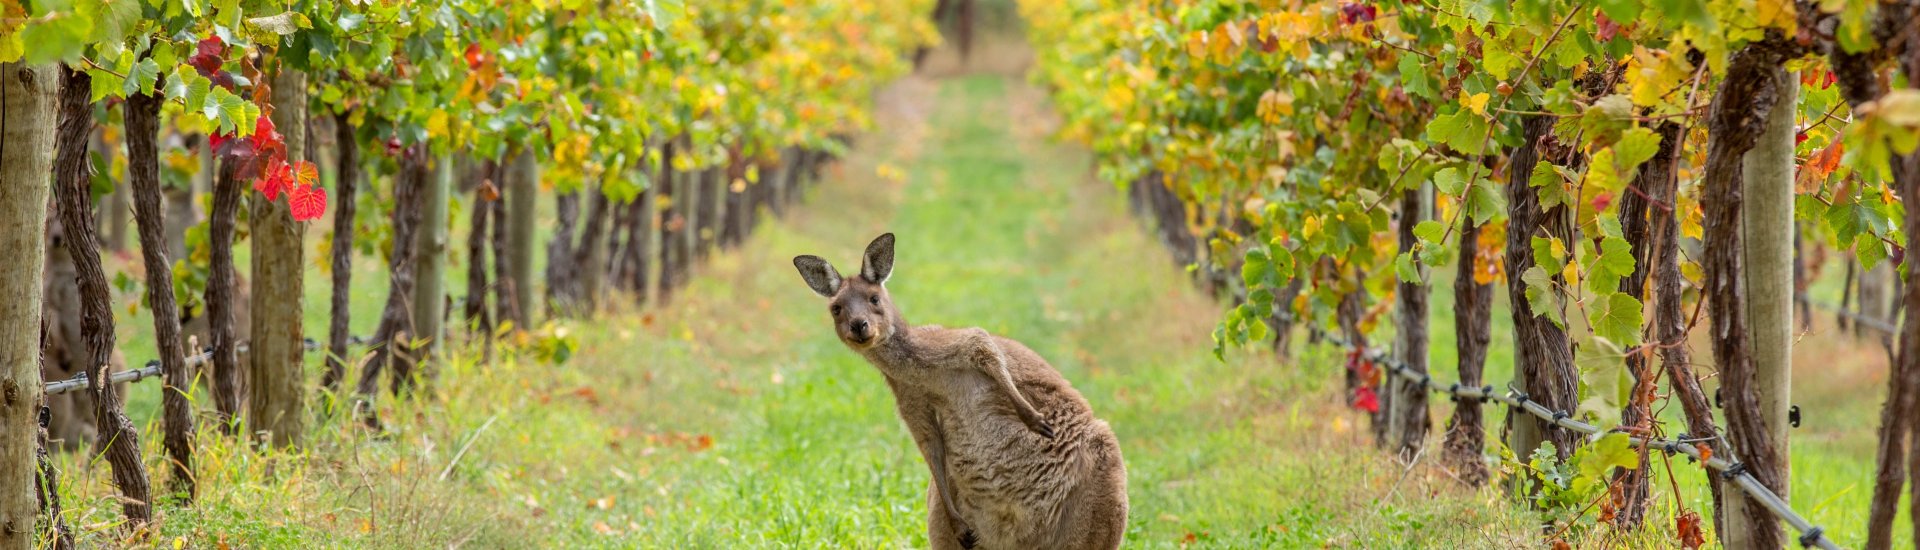 Kangaroo - Tourism Australia